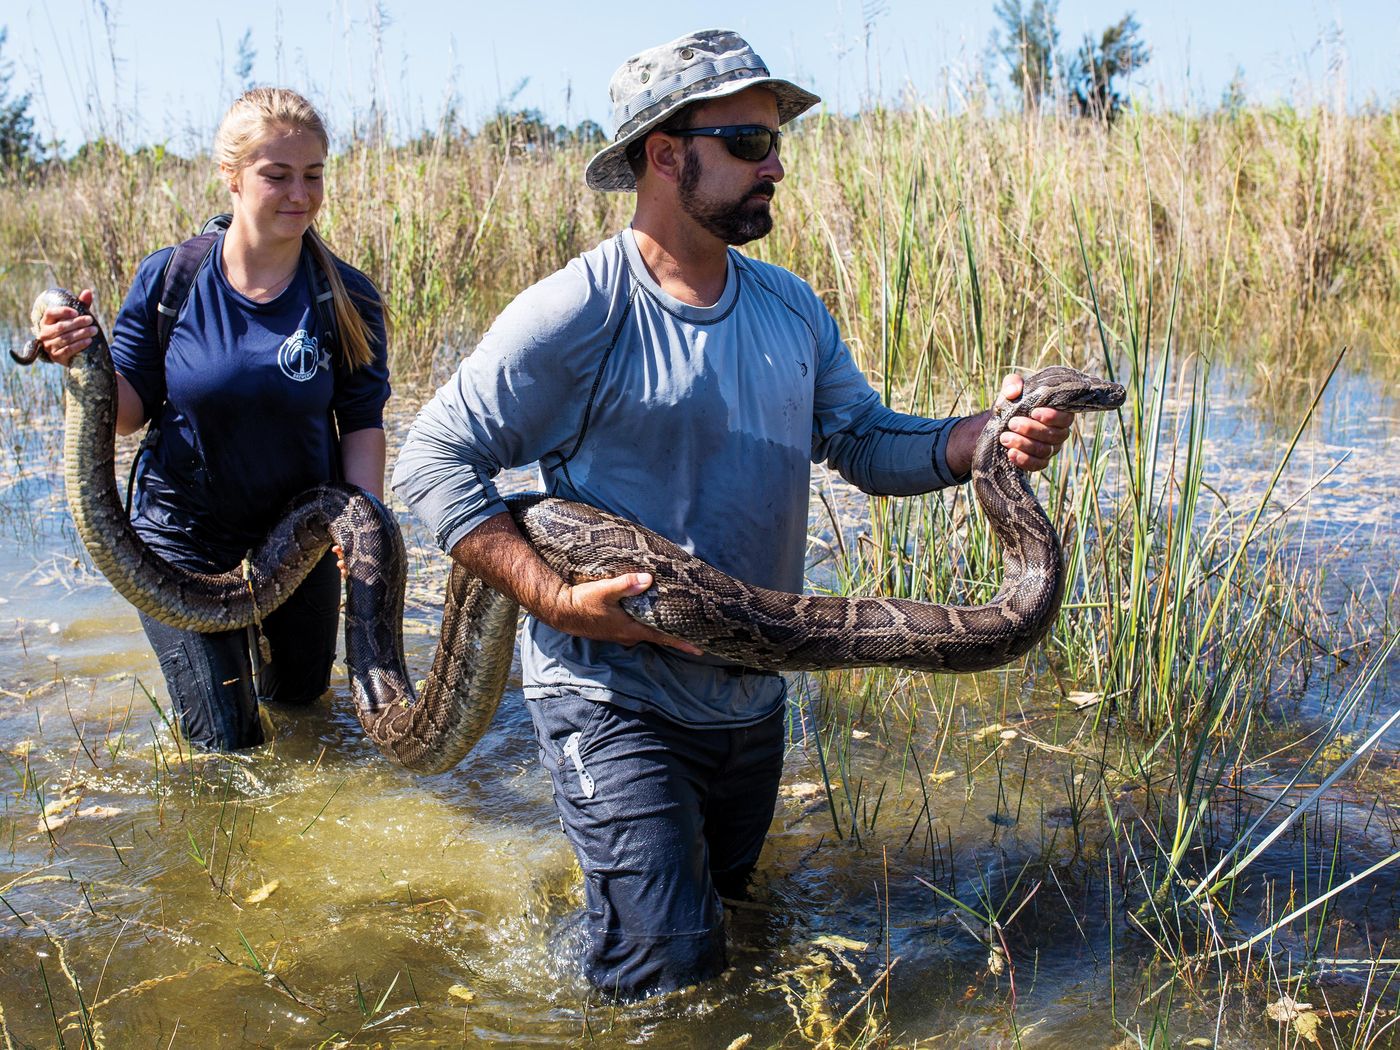 Www Six Voices 2019 School Xxx - The Snakes That Ate Florida | Science | Smithsonian Magazine